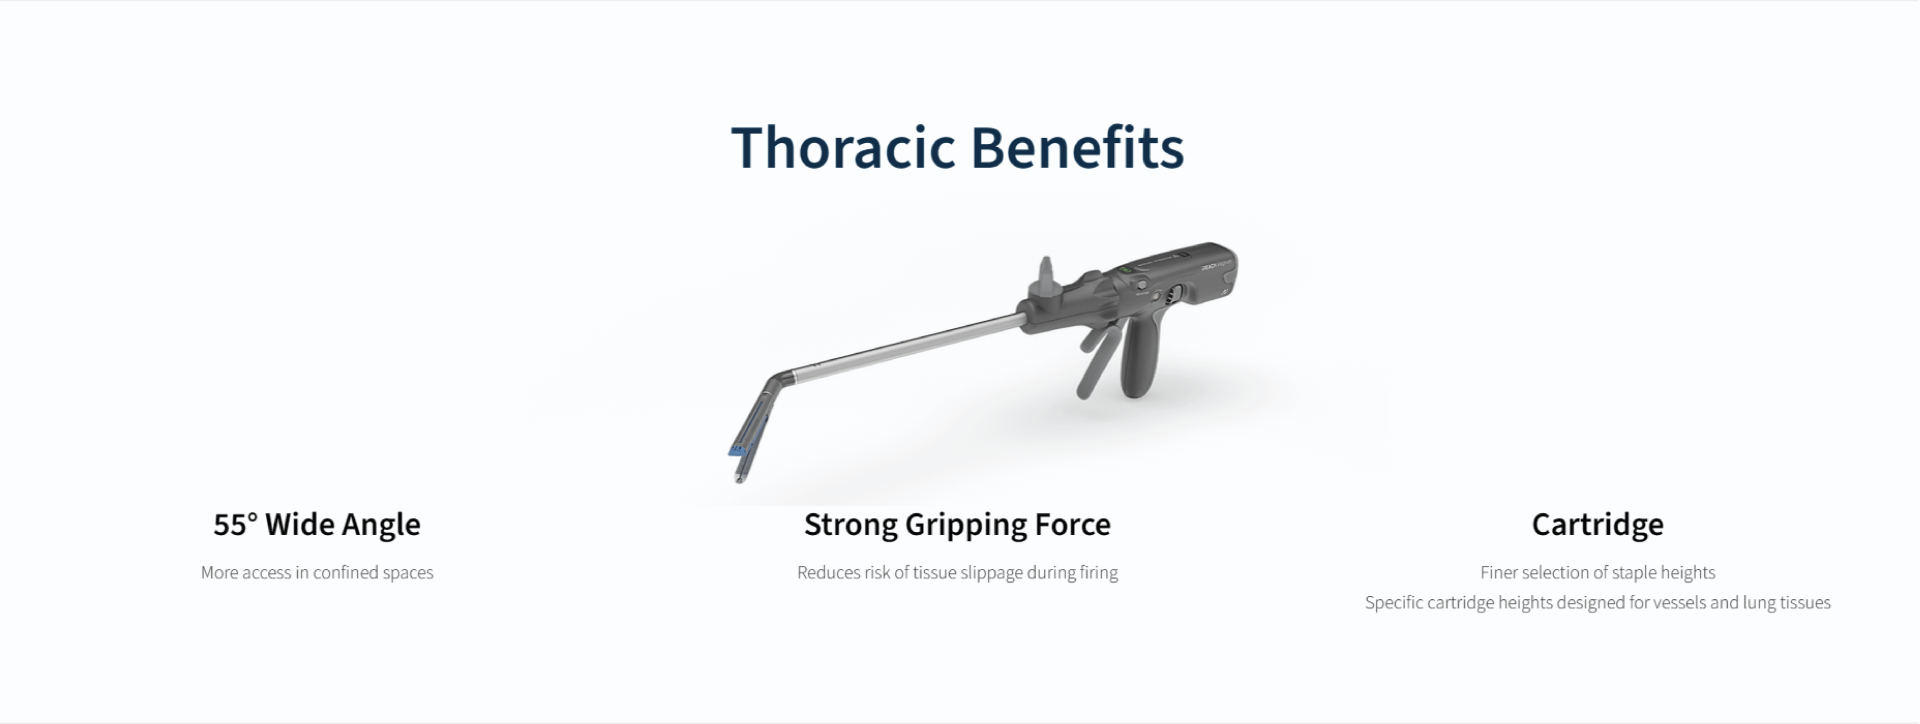 Thoracic Benefits-01